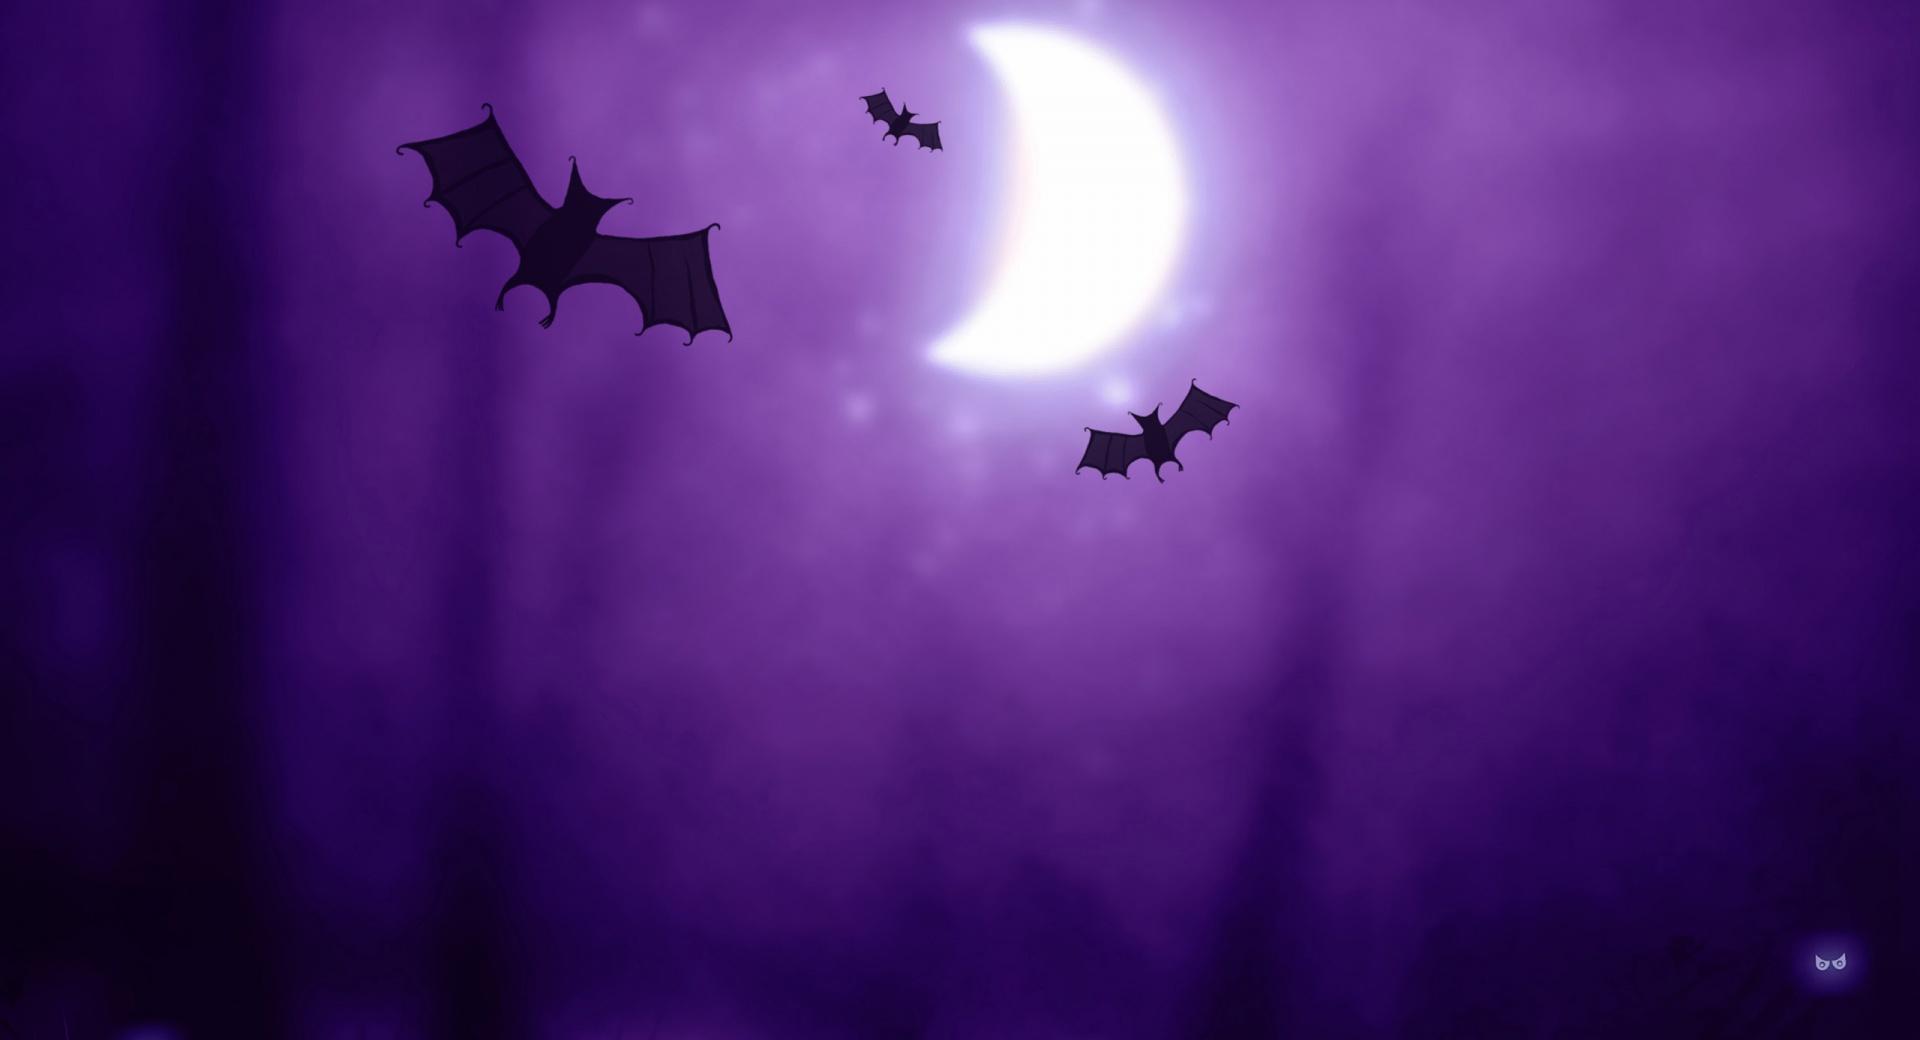 Bats  Halloween at 2048 x 2048 iPad size wallpapers HD quality